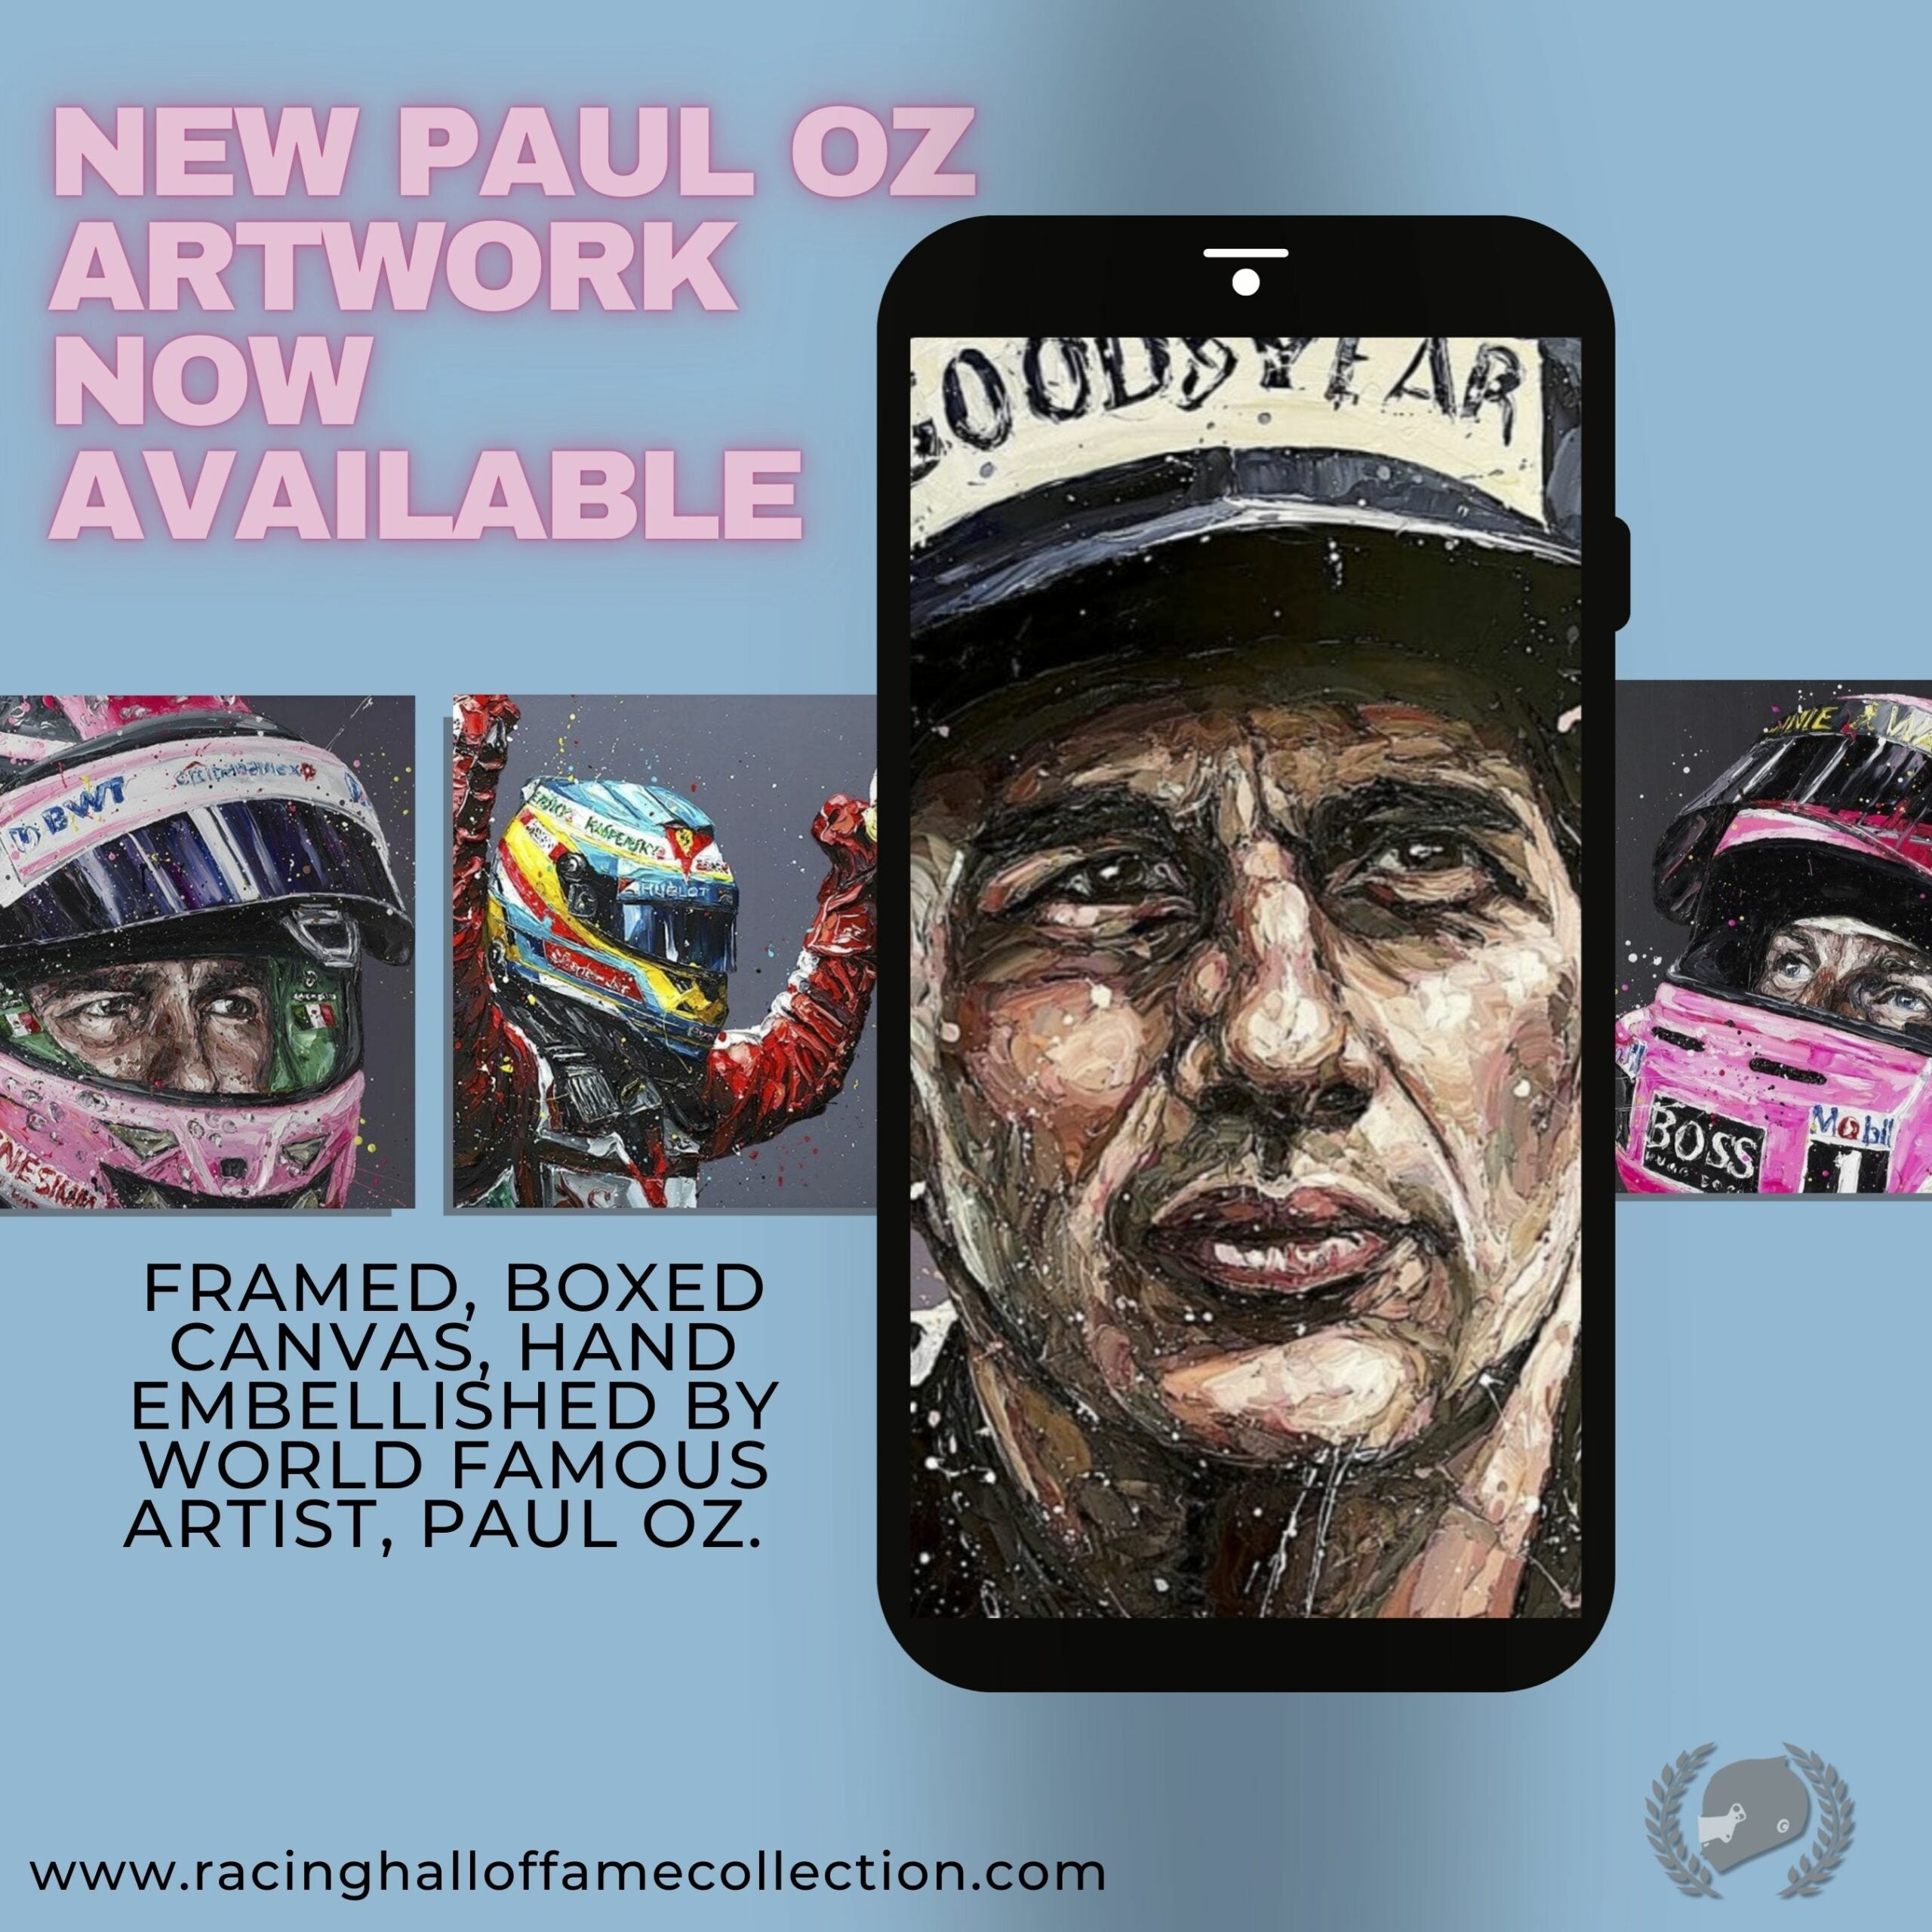 PAUL OZ ARTWORK, NOW AVAILABLE